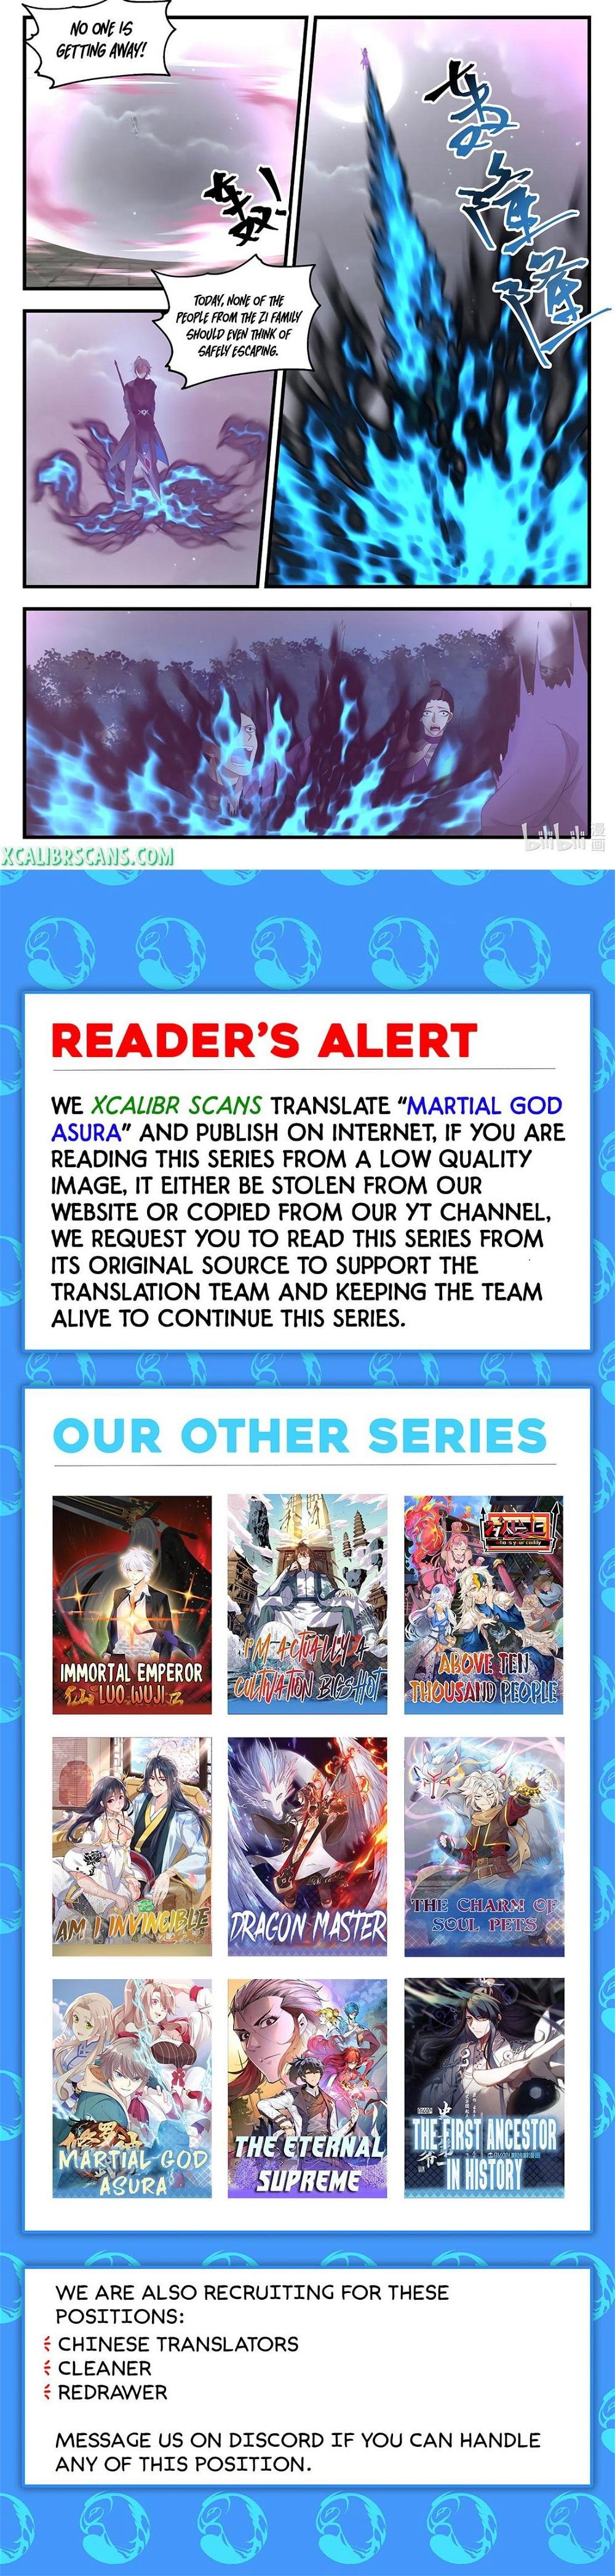 Martial God Asura Chapter 539 - Page 10